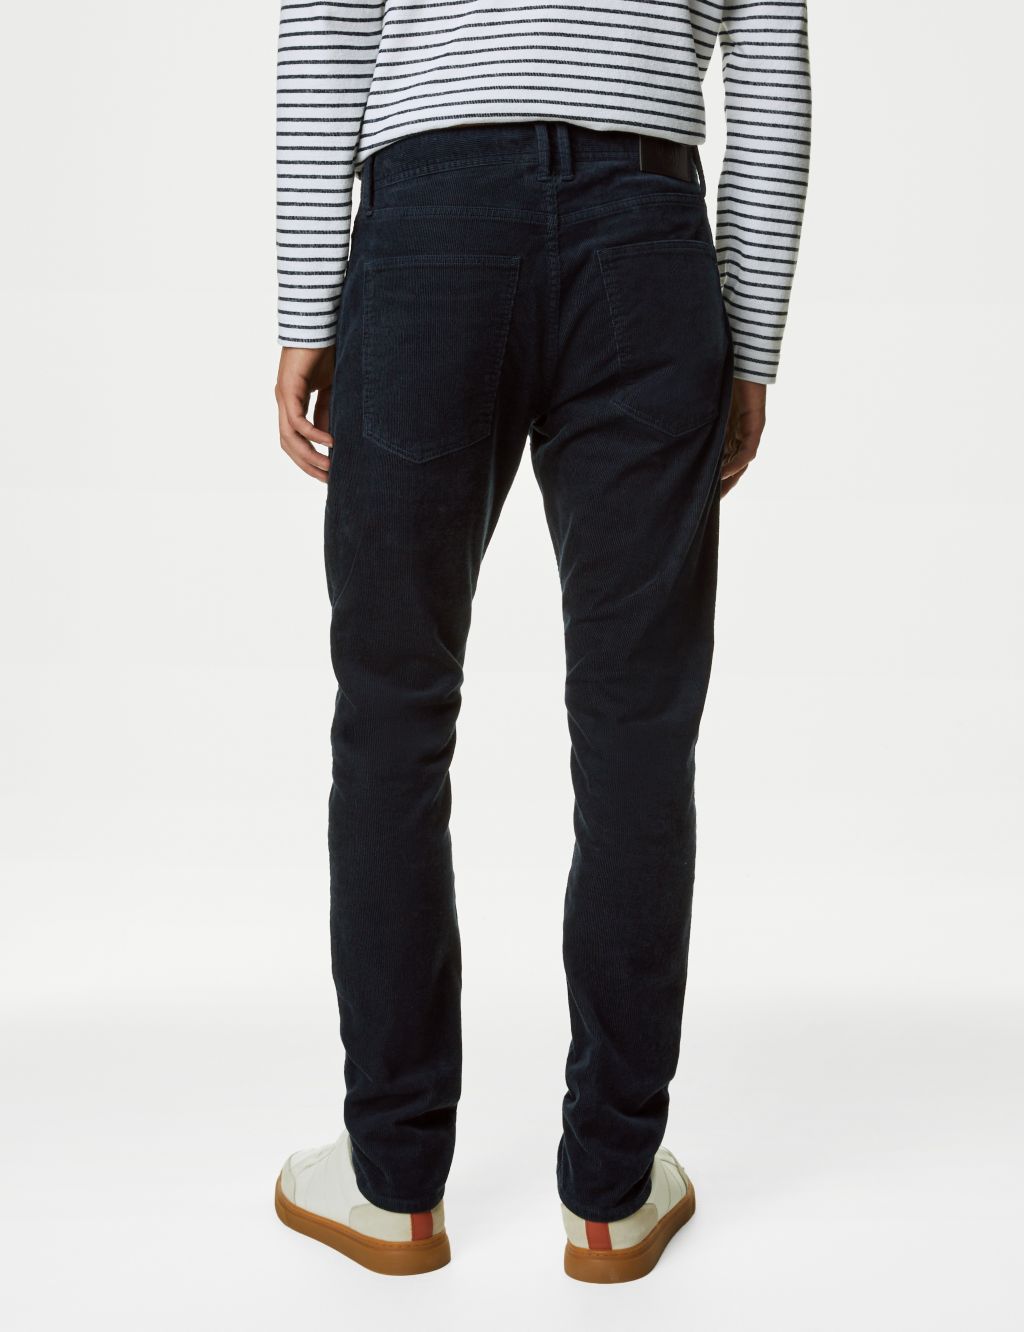 Slim Fit Corduroy 5 Pocket Trousers image 6